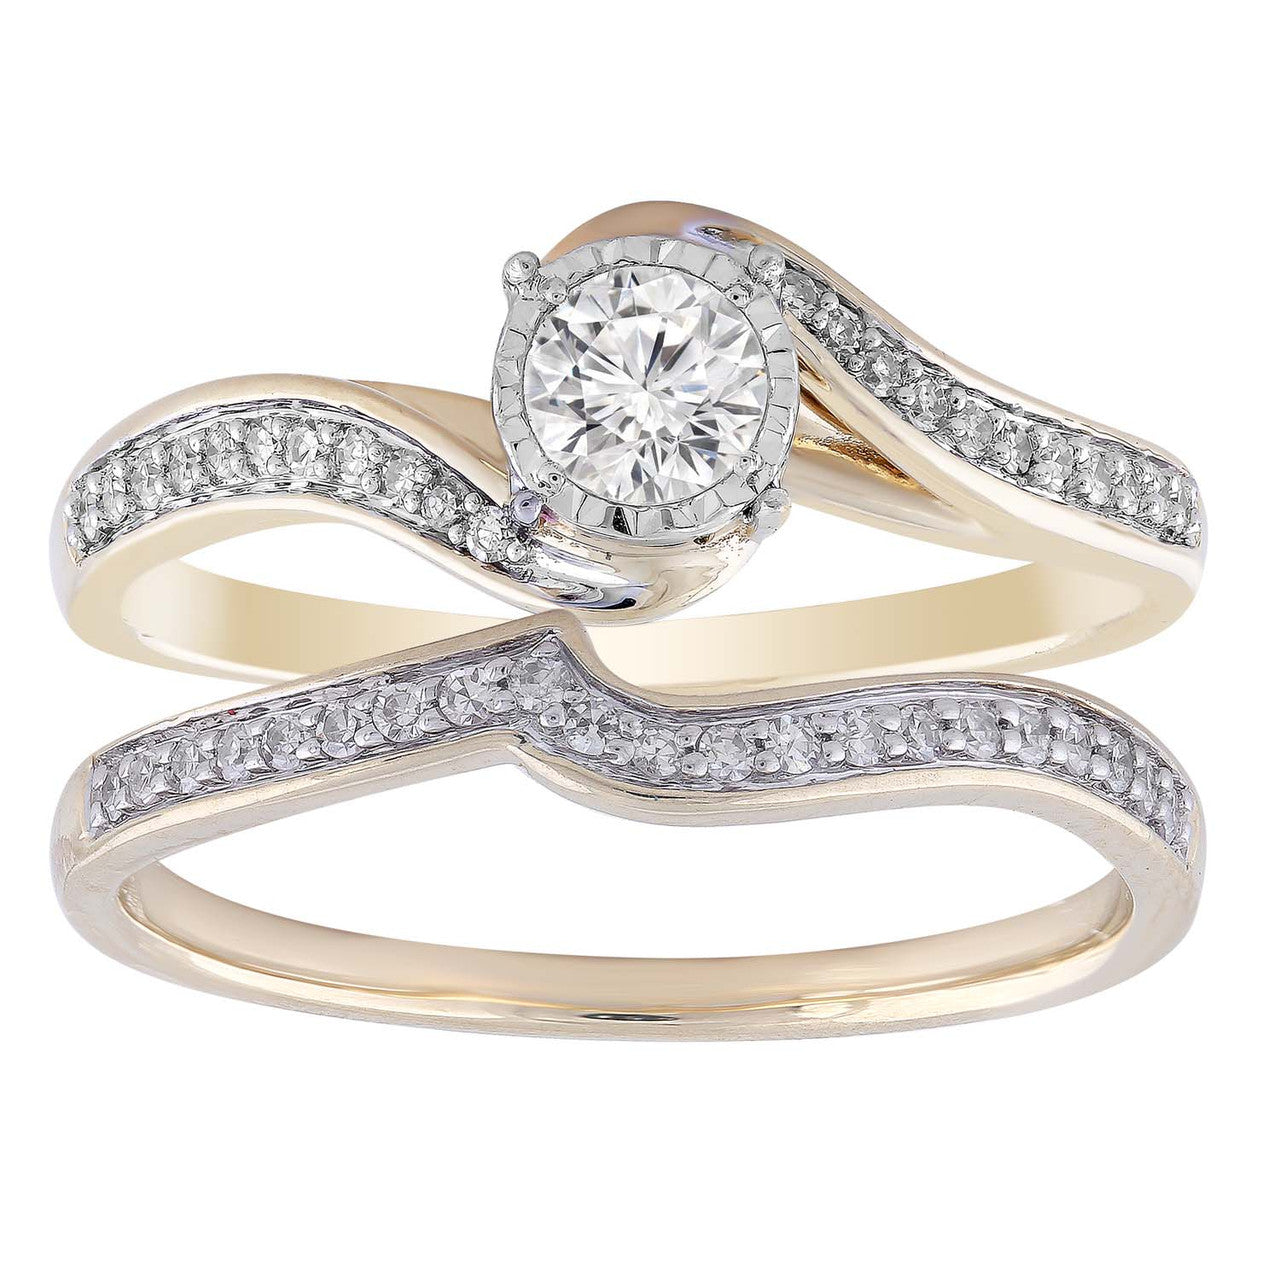 Ice Jewellery Ring Set with 0.50ct Diamond in 9K Yellow Gold -  R-35877-Y | Ice Jewellery Australia